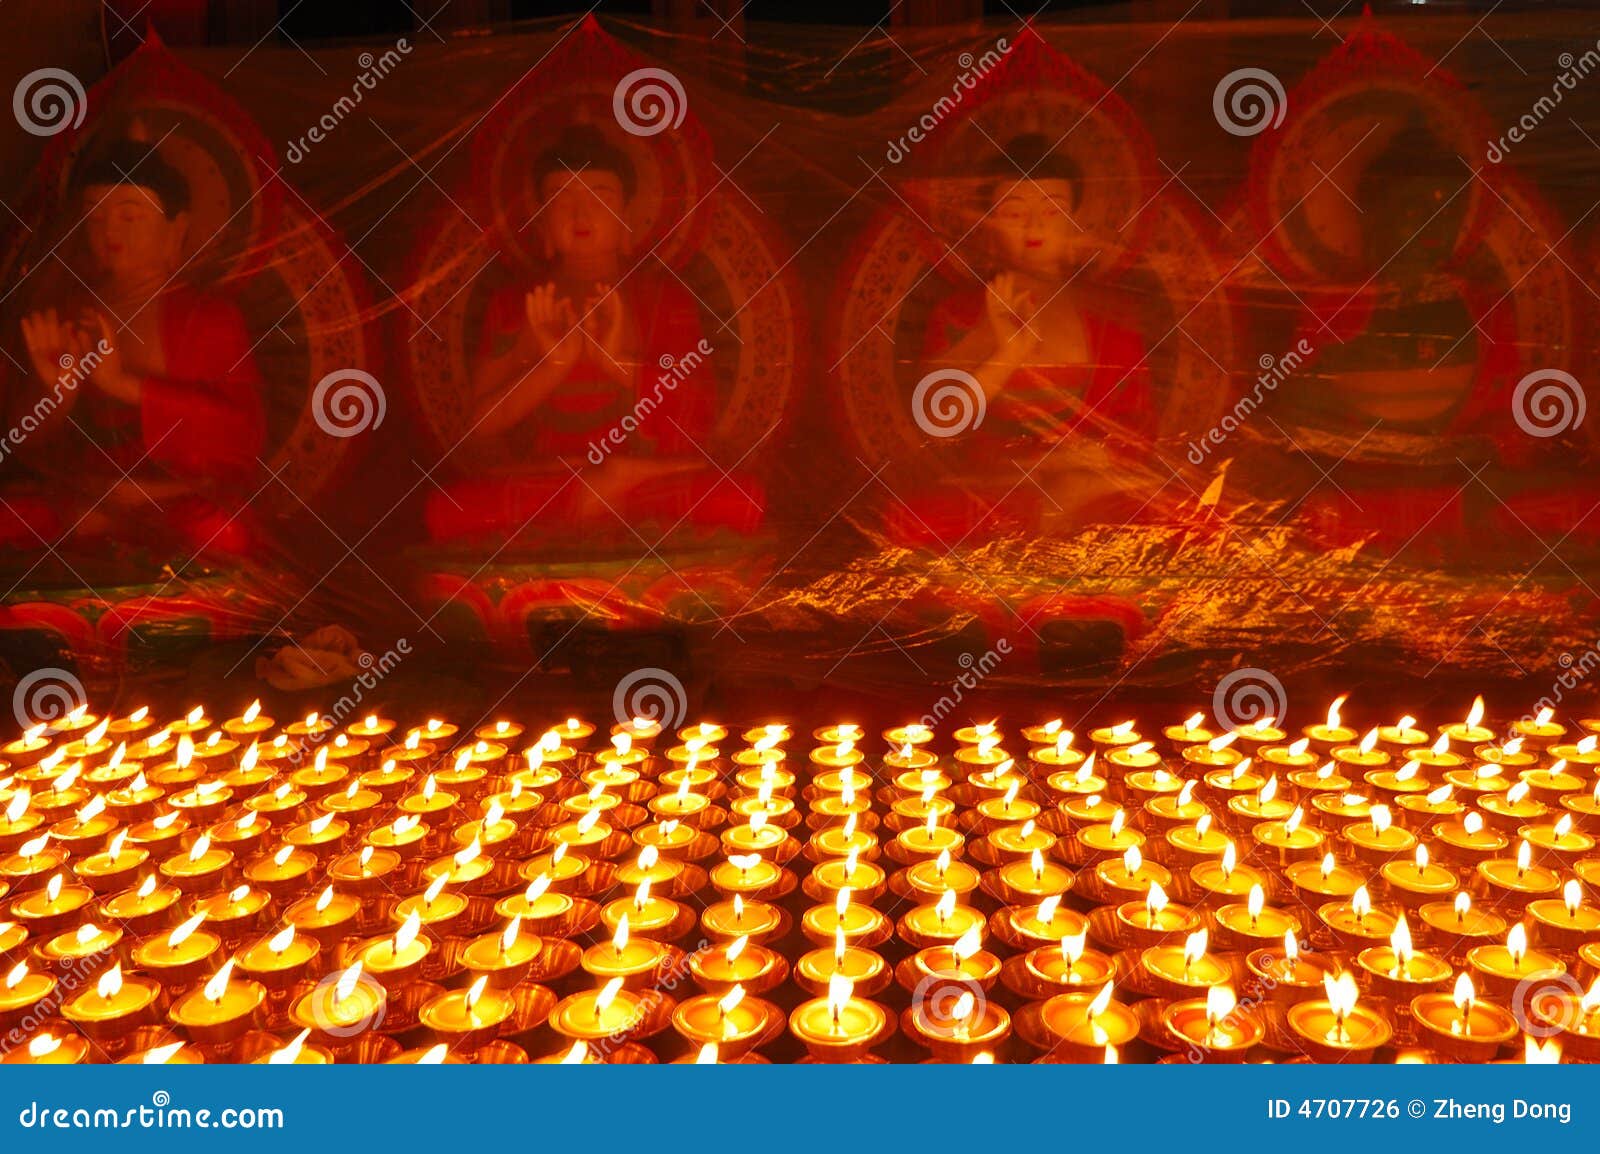 buddhist butter lamps